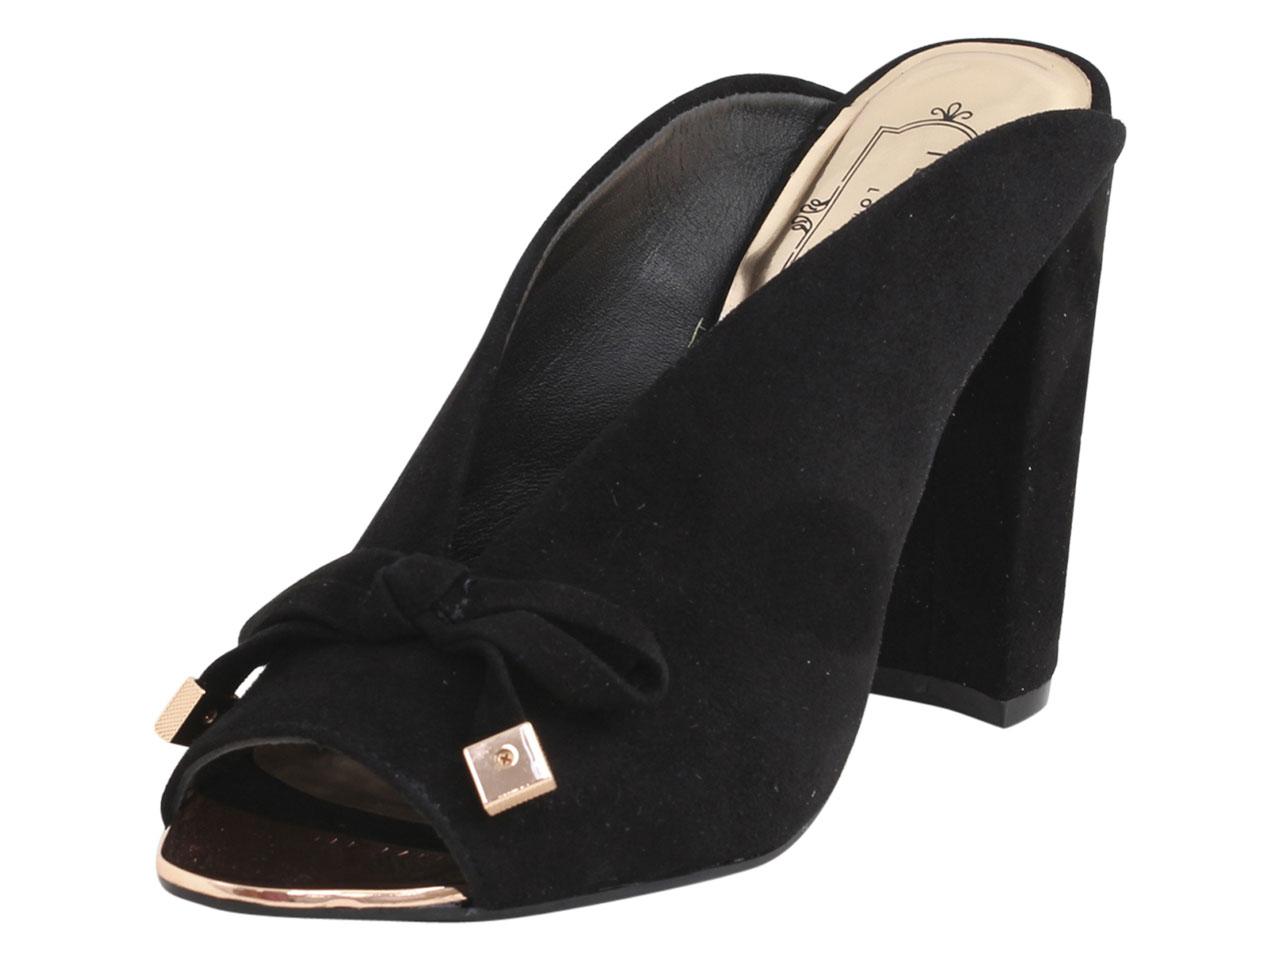 Ted Baker Women's Marinax Pumps Heels Shoes - Black - 7.5 B(M) US